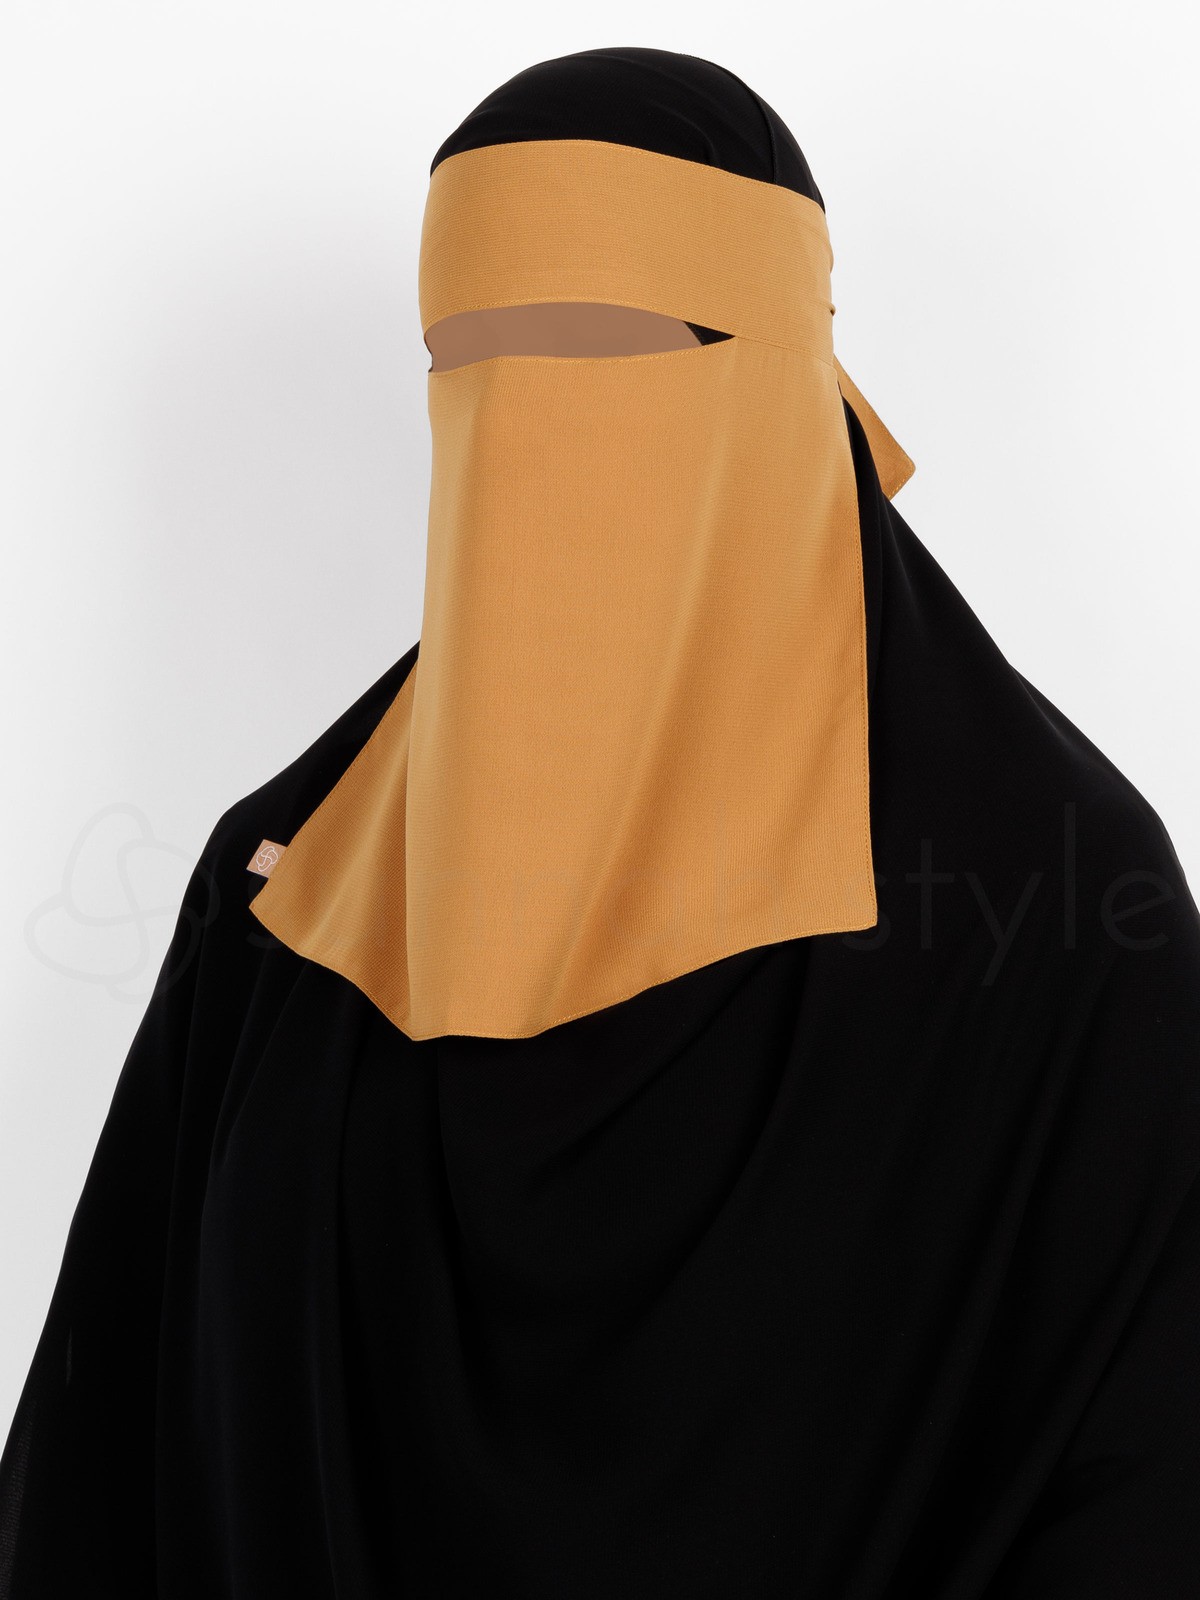 Sunnah Style - Short One Layer Niqab (Honey)